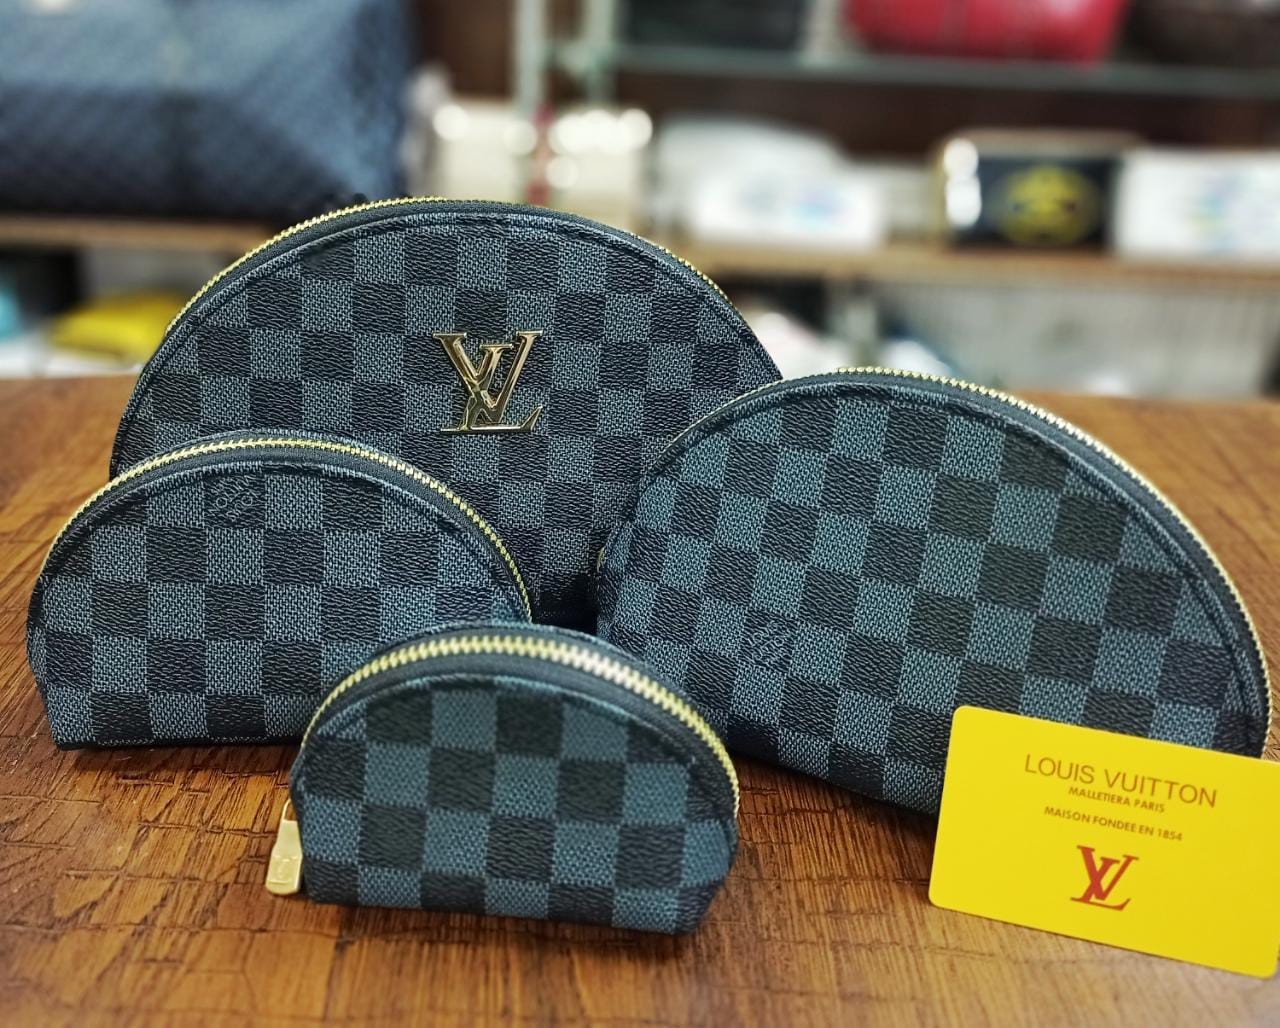 Louis Vuitton Mercer Medium Pebbled Leather Belted Satchel in Pakistan - Royal Watches Online Shop